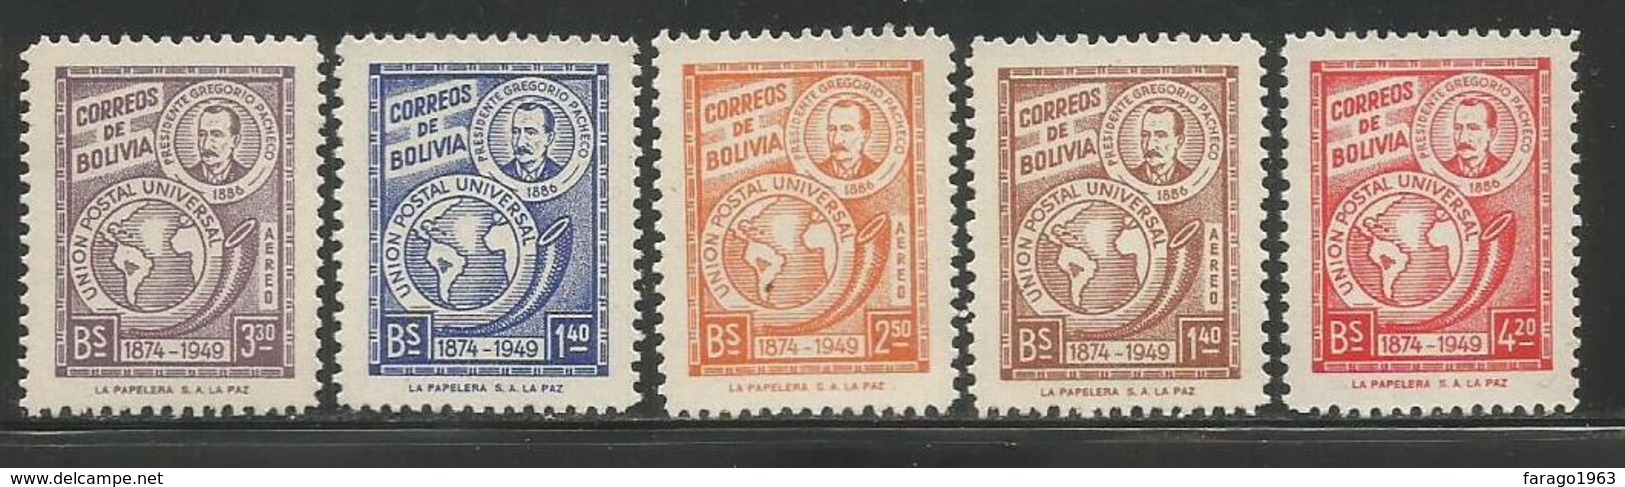 1950 Bolivia UPU   Complete Set Of 5  MNH - Bolivien